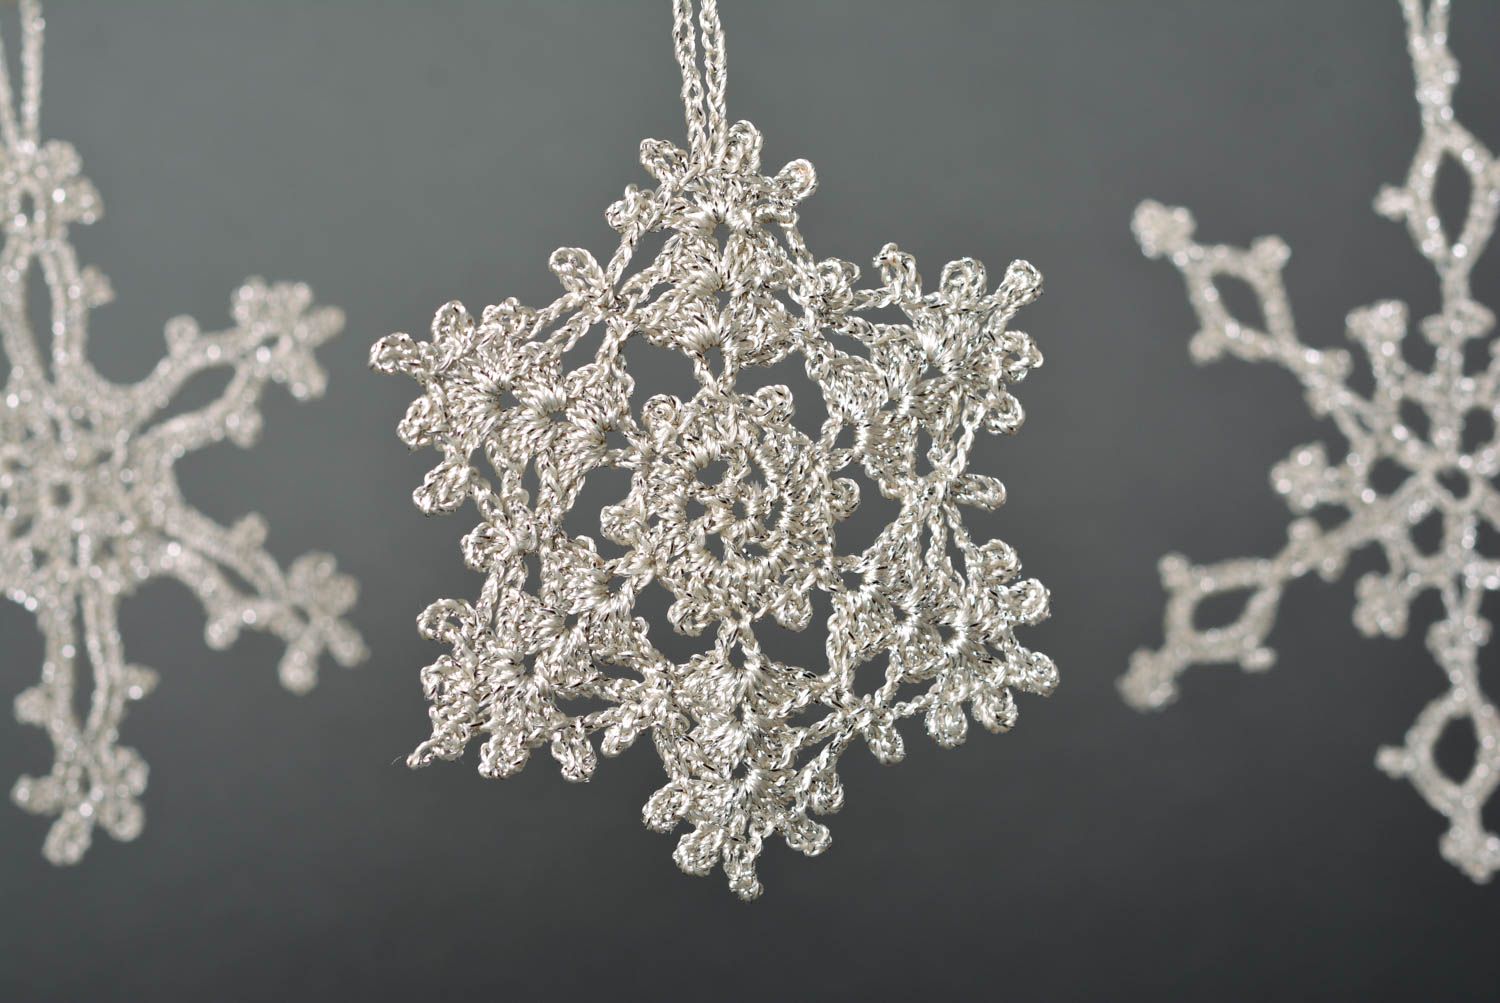 Handmade toy unusual toy for Christmas unusual crochet snowflake New Year decor photo 1